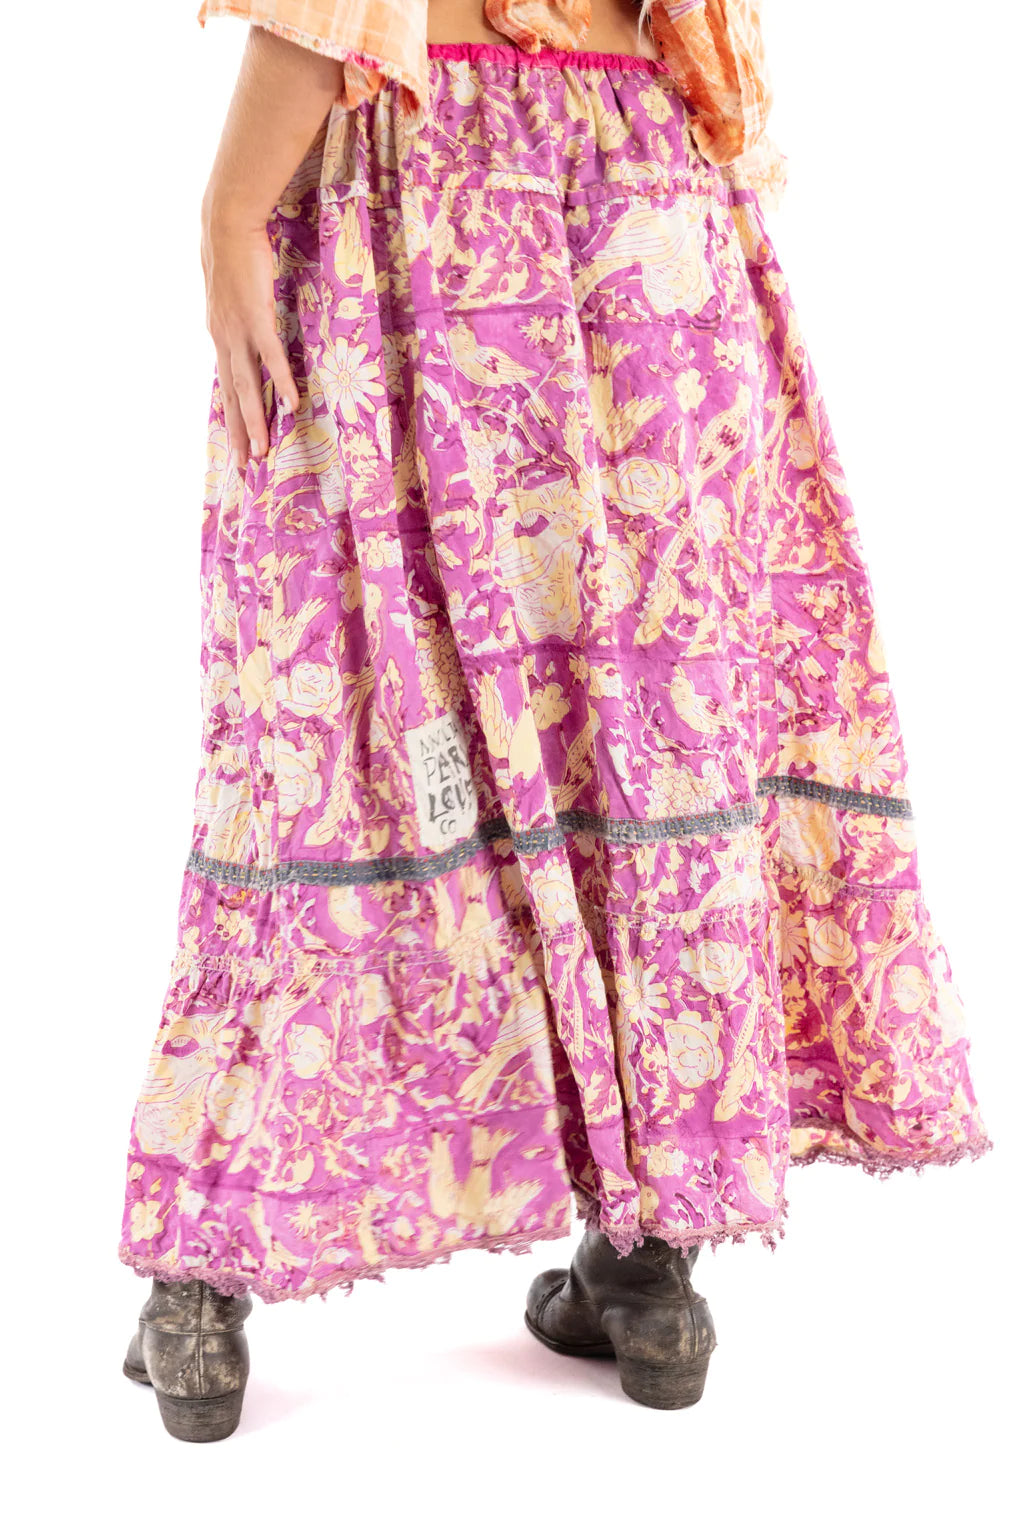 Magnolia Pearl SKIRT 151-WILDB-OS  Nepali Peasant Skirt